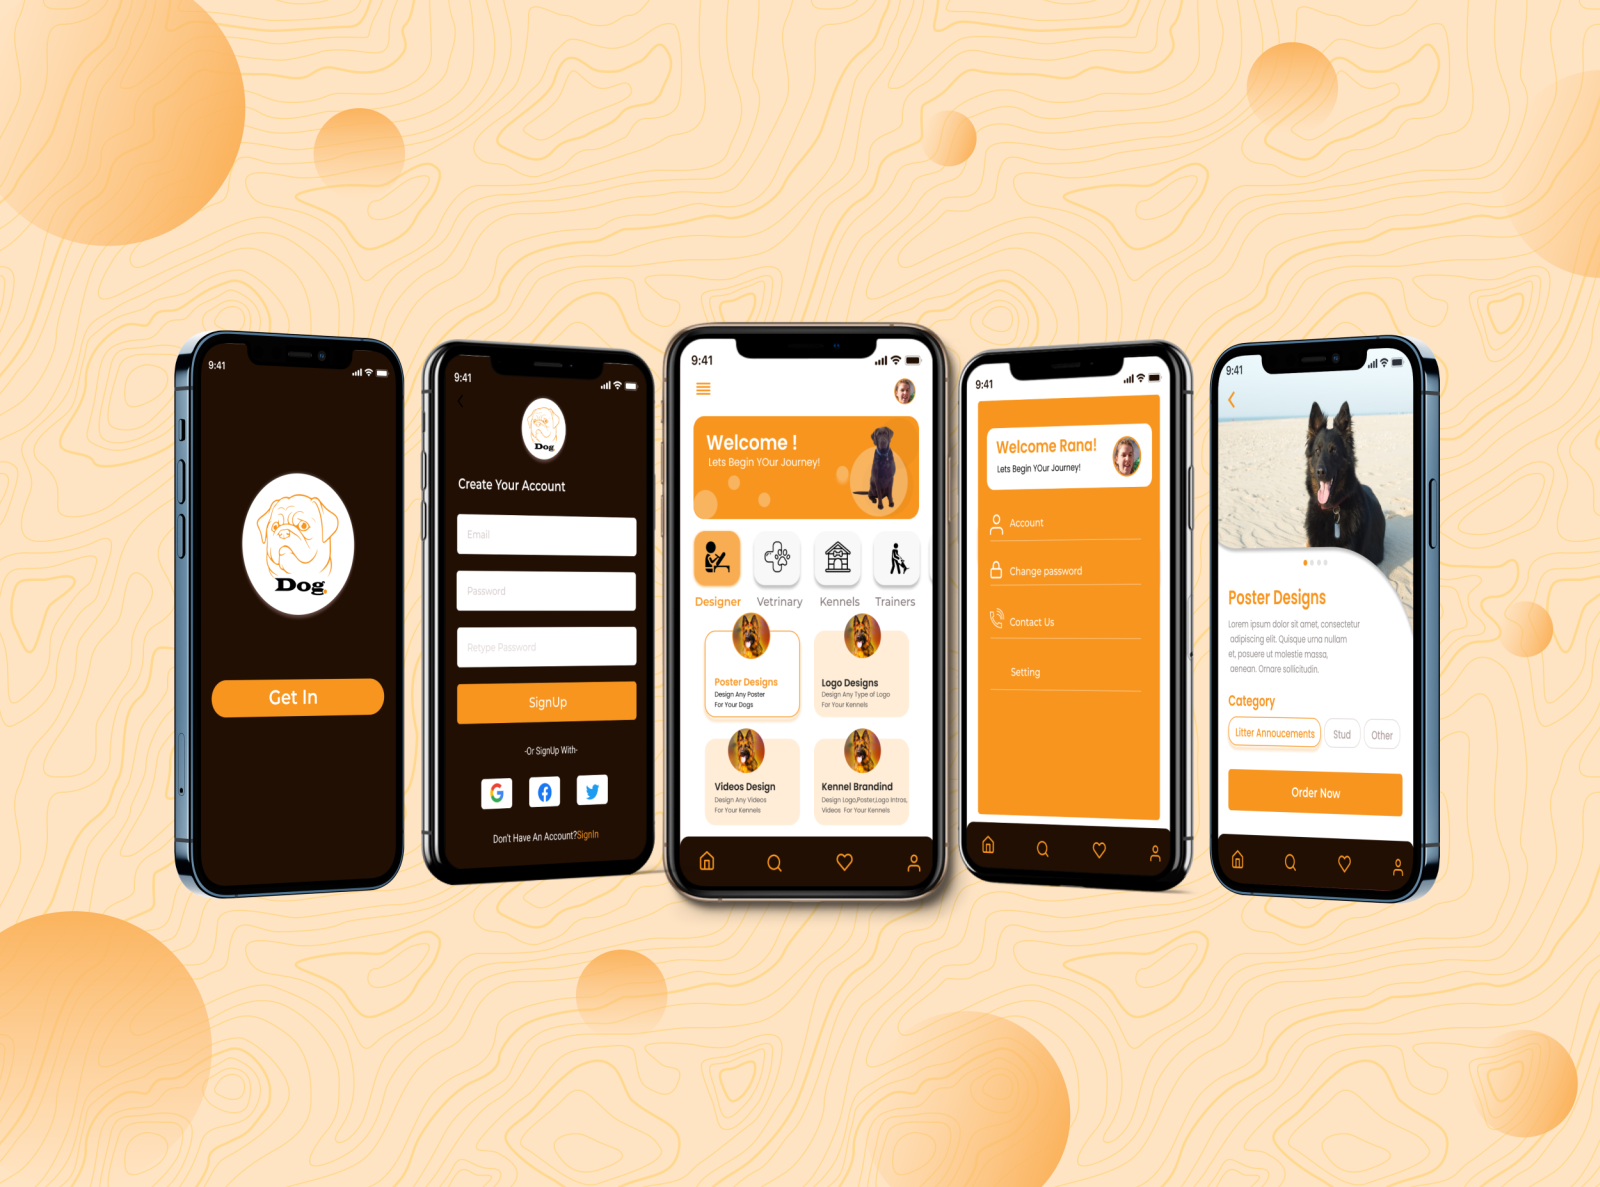 Dog Mobile App Ui design by Rana Ahmad Nawaz on Dribbble